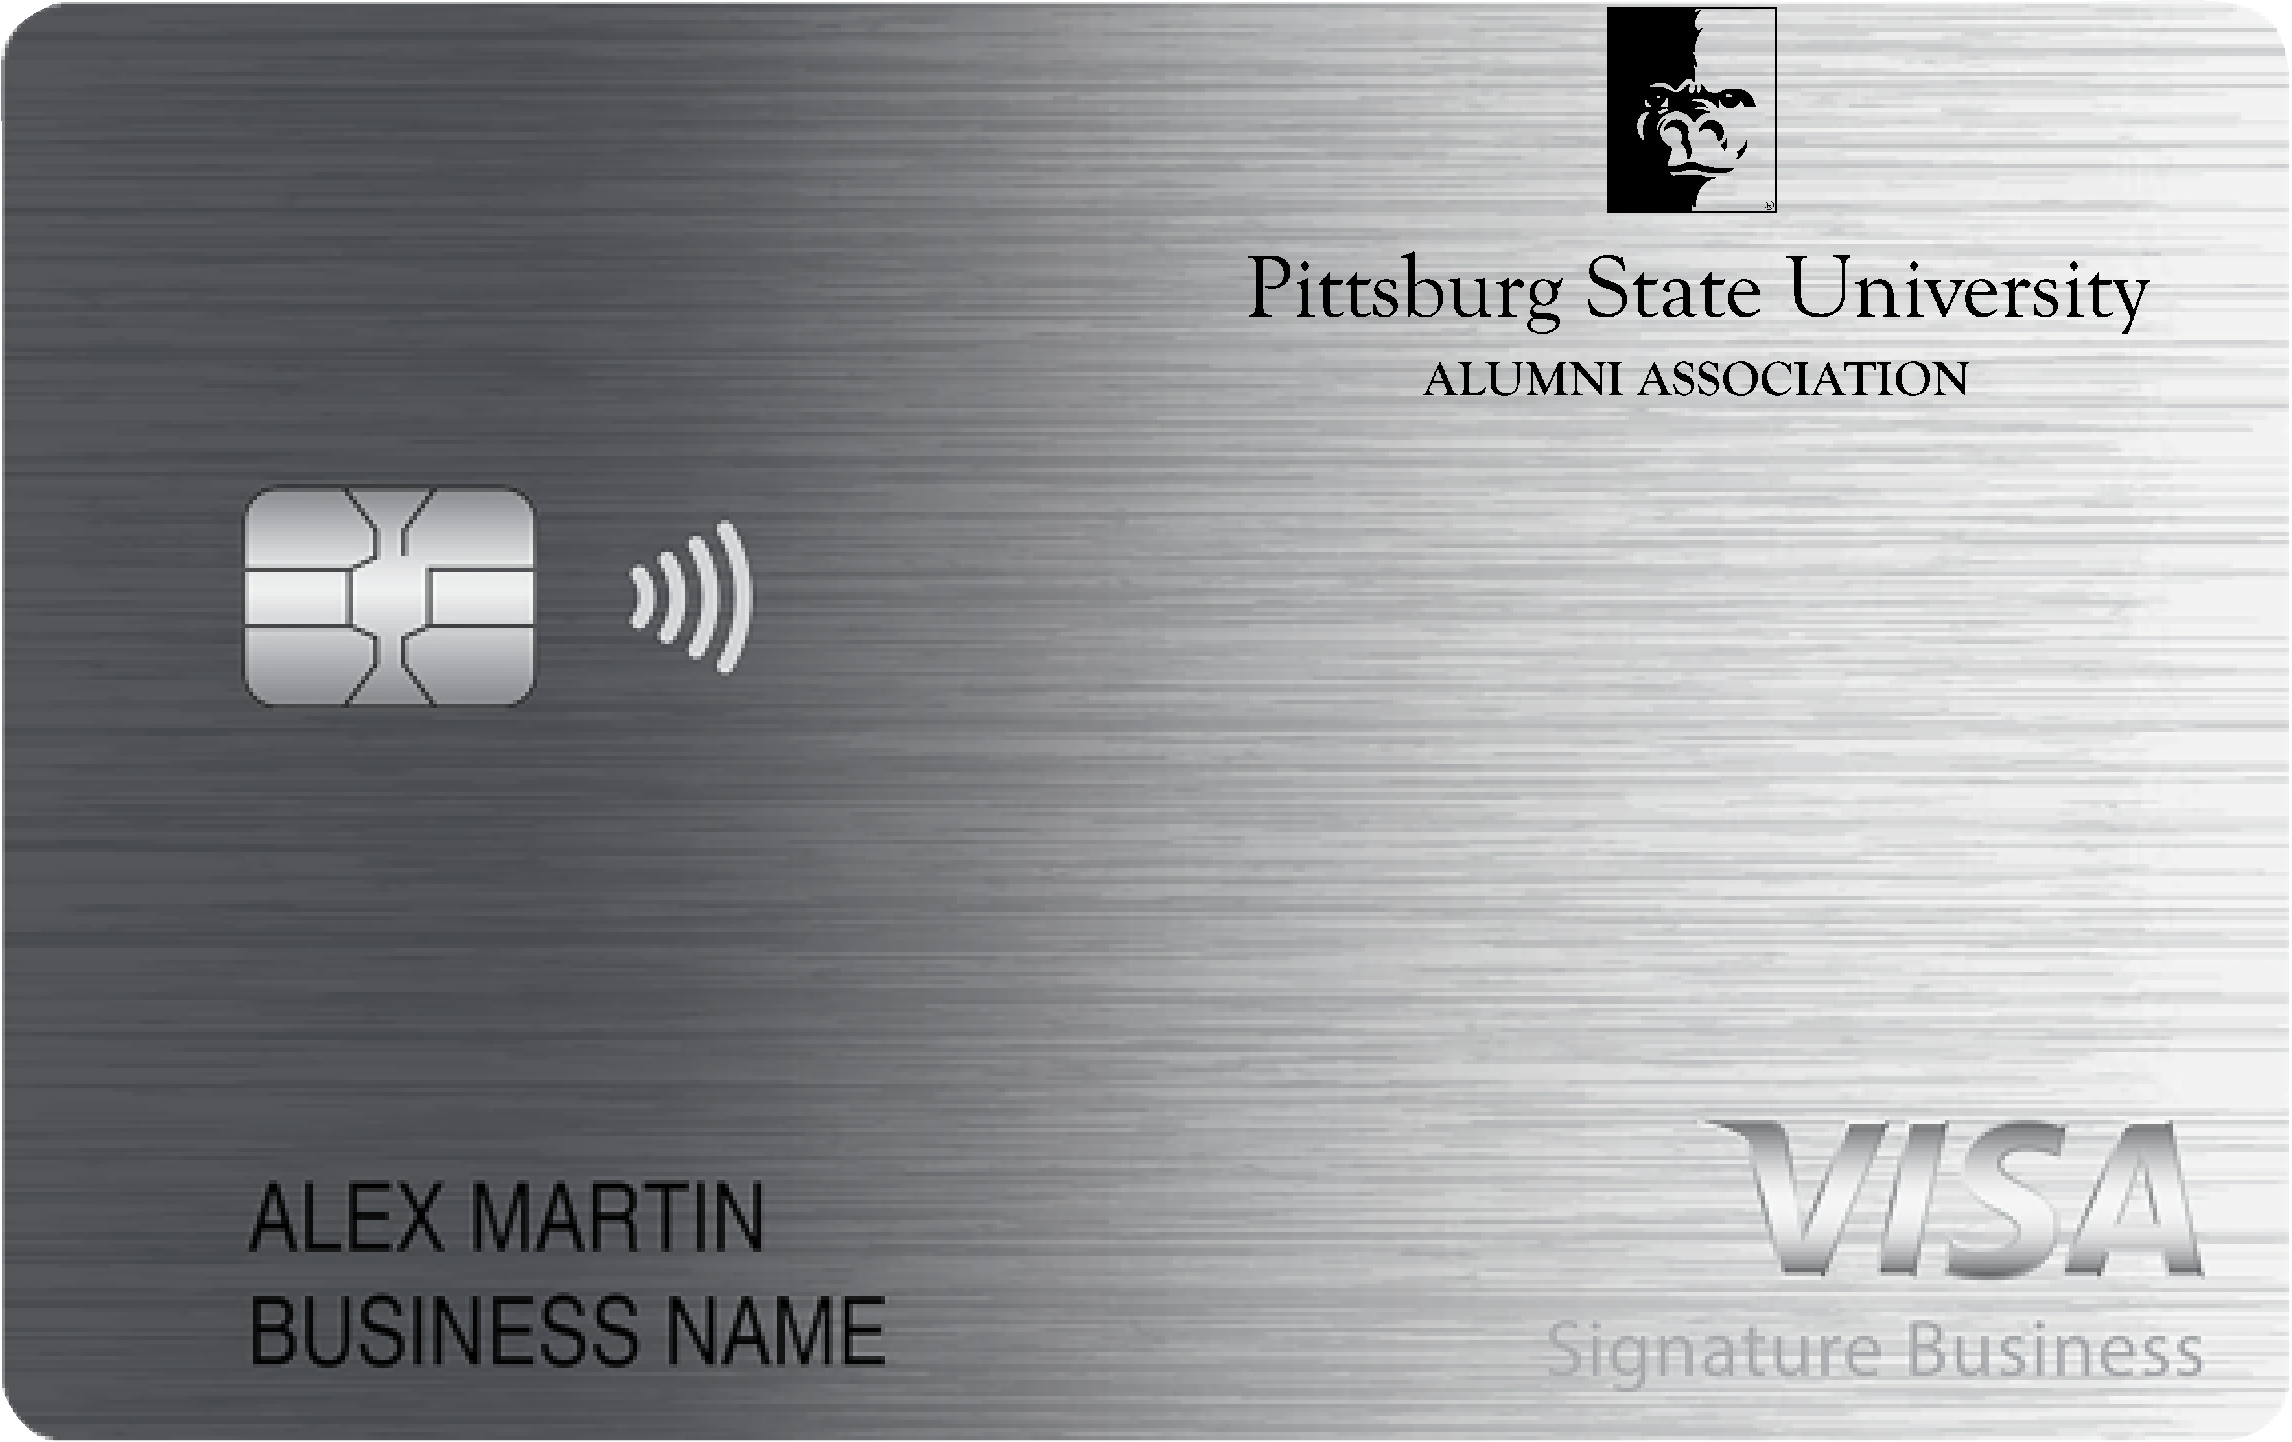 INTRUST Bank Pittsburg State University Smart Business Rewards Card